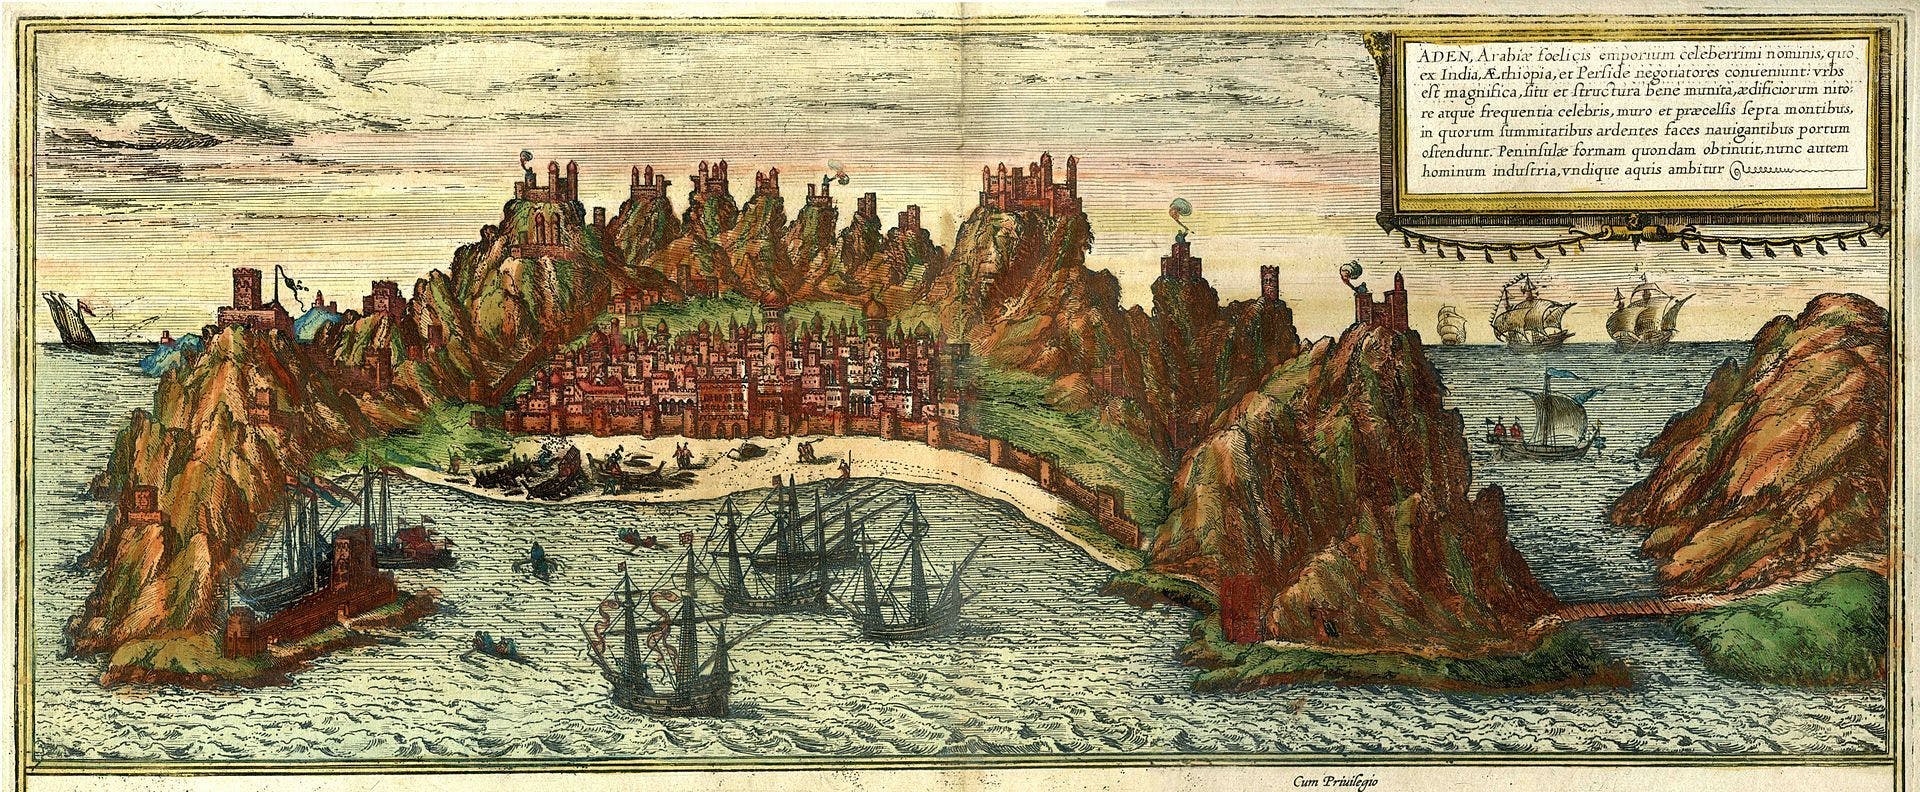 The Portuguese fleet in Aden